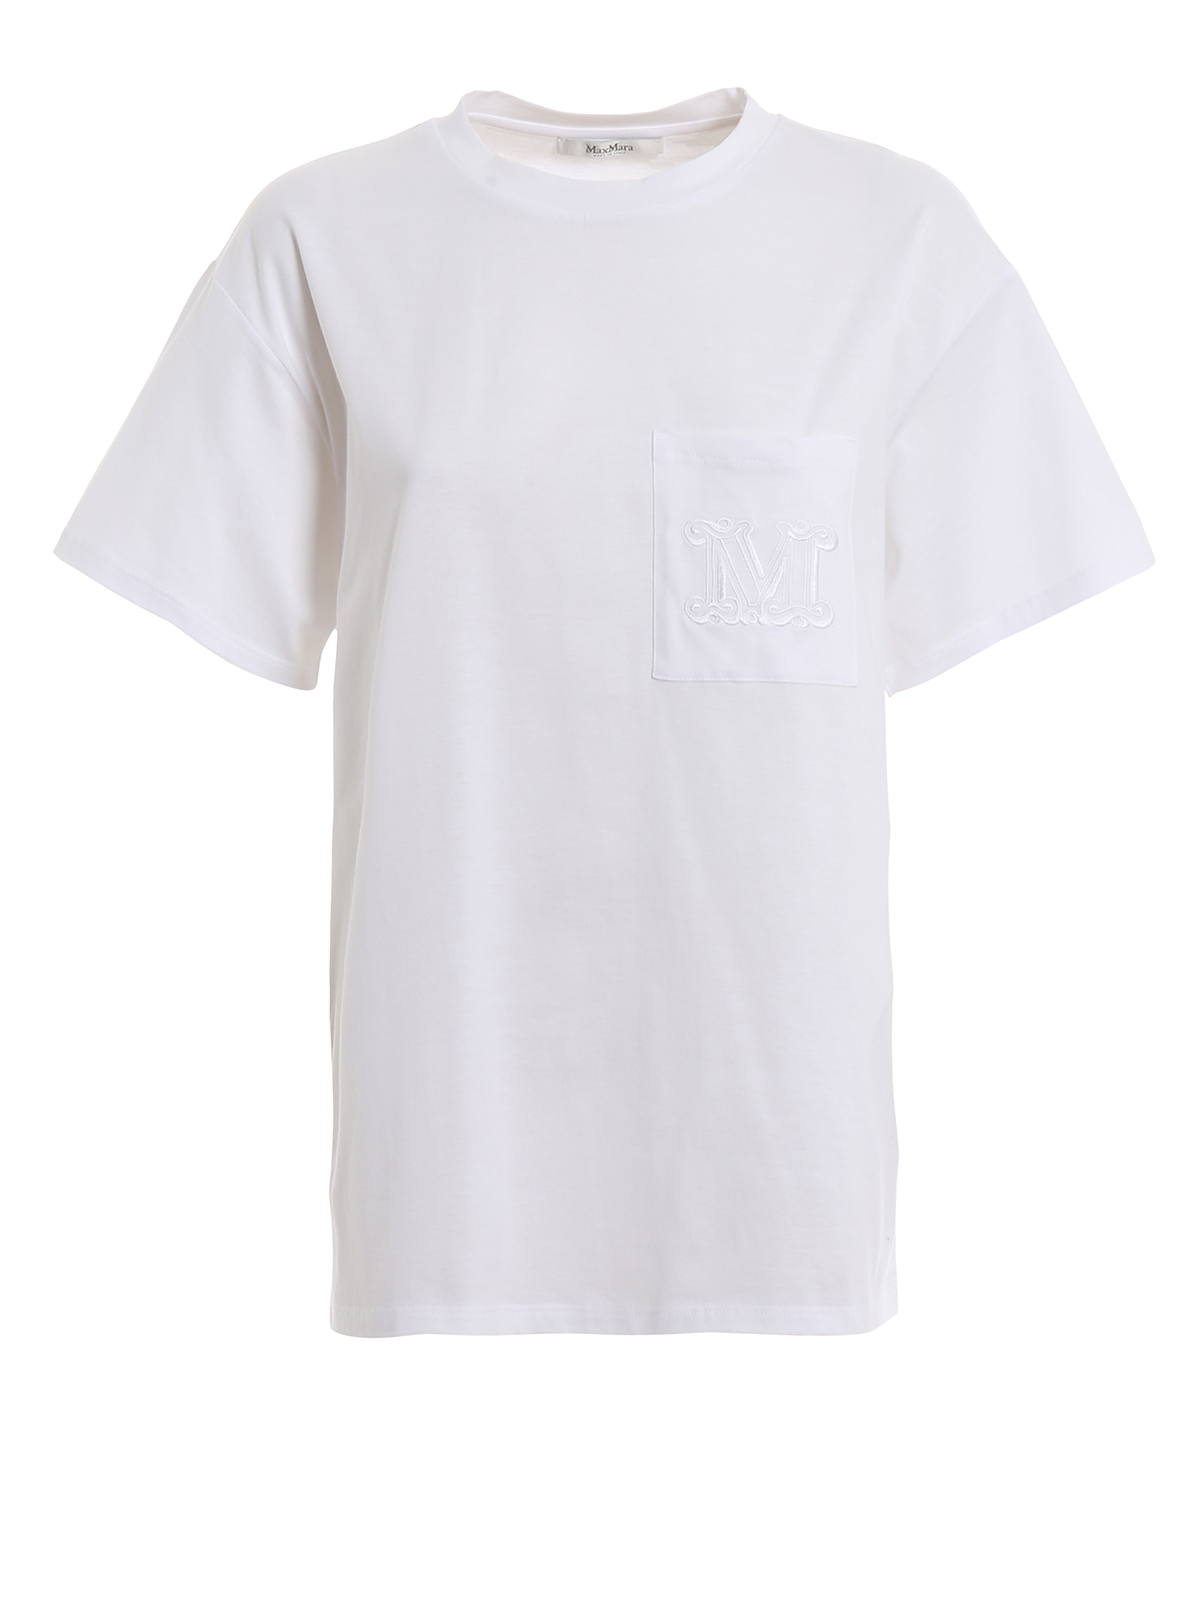 T-shirts Max Mara - Cabaret white cotton jersey T-shirt - 194102926001